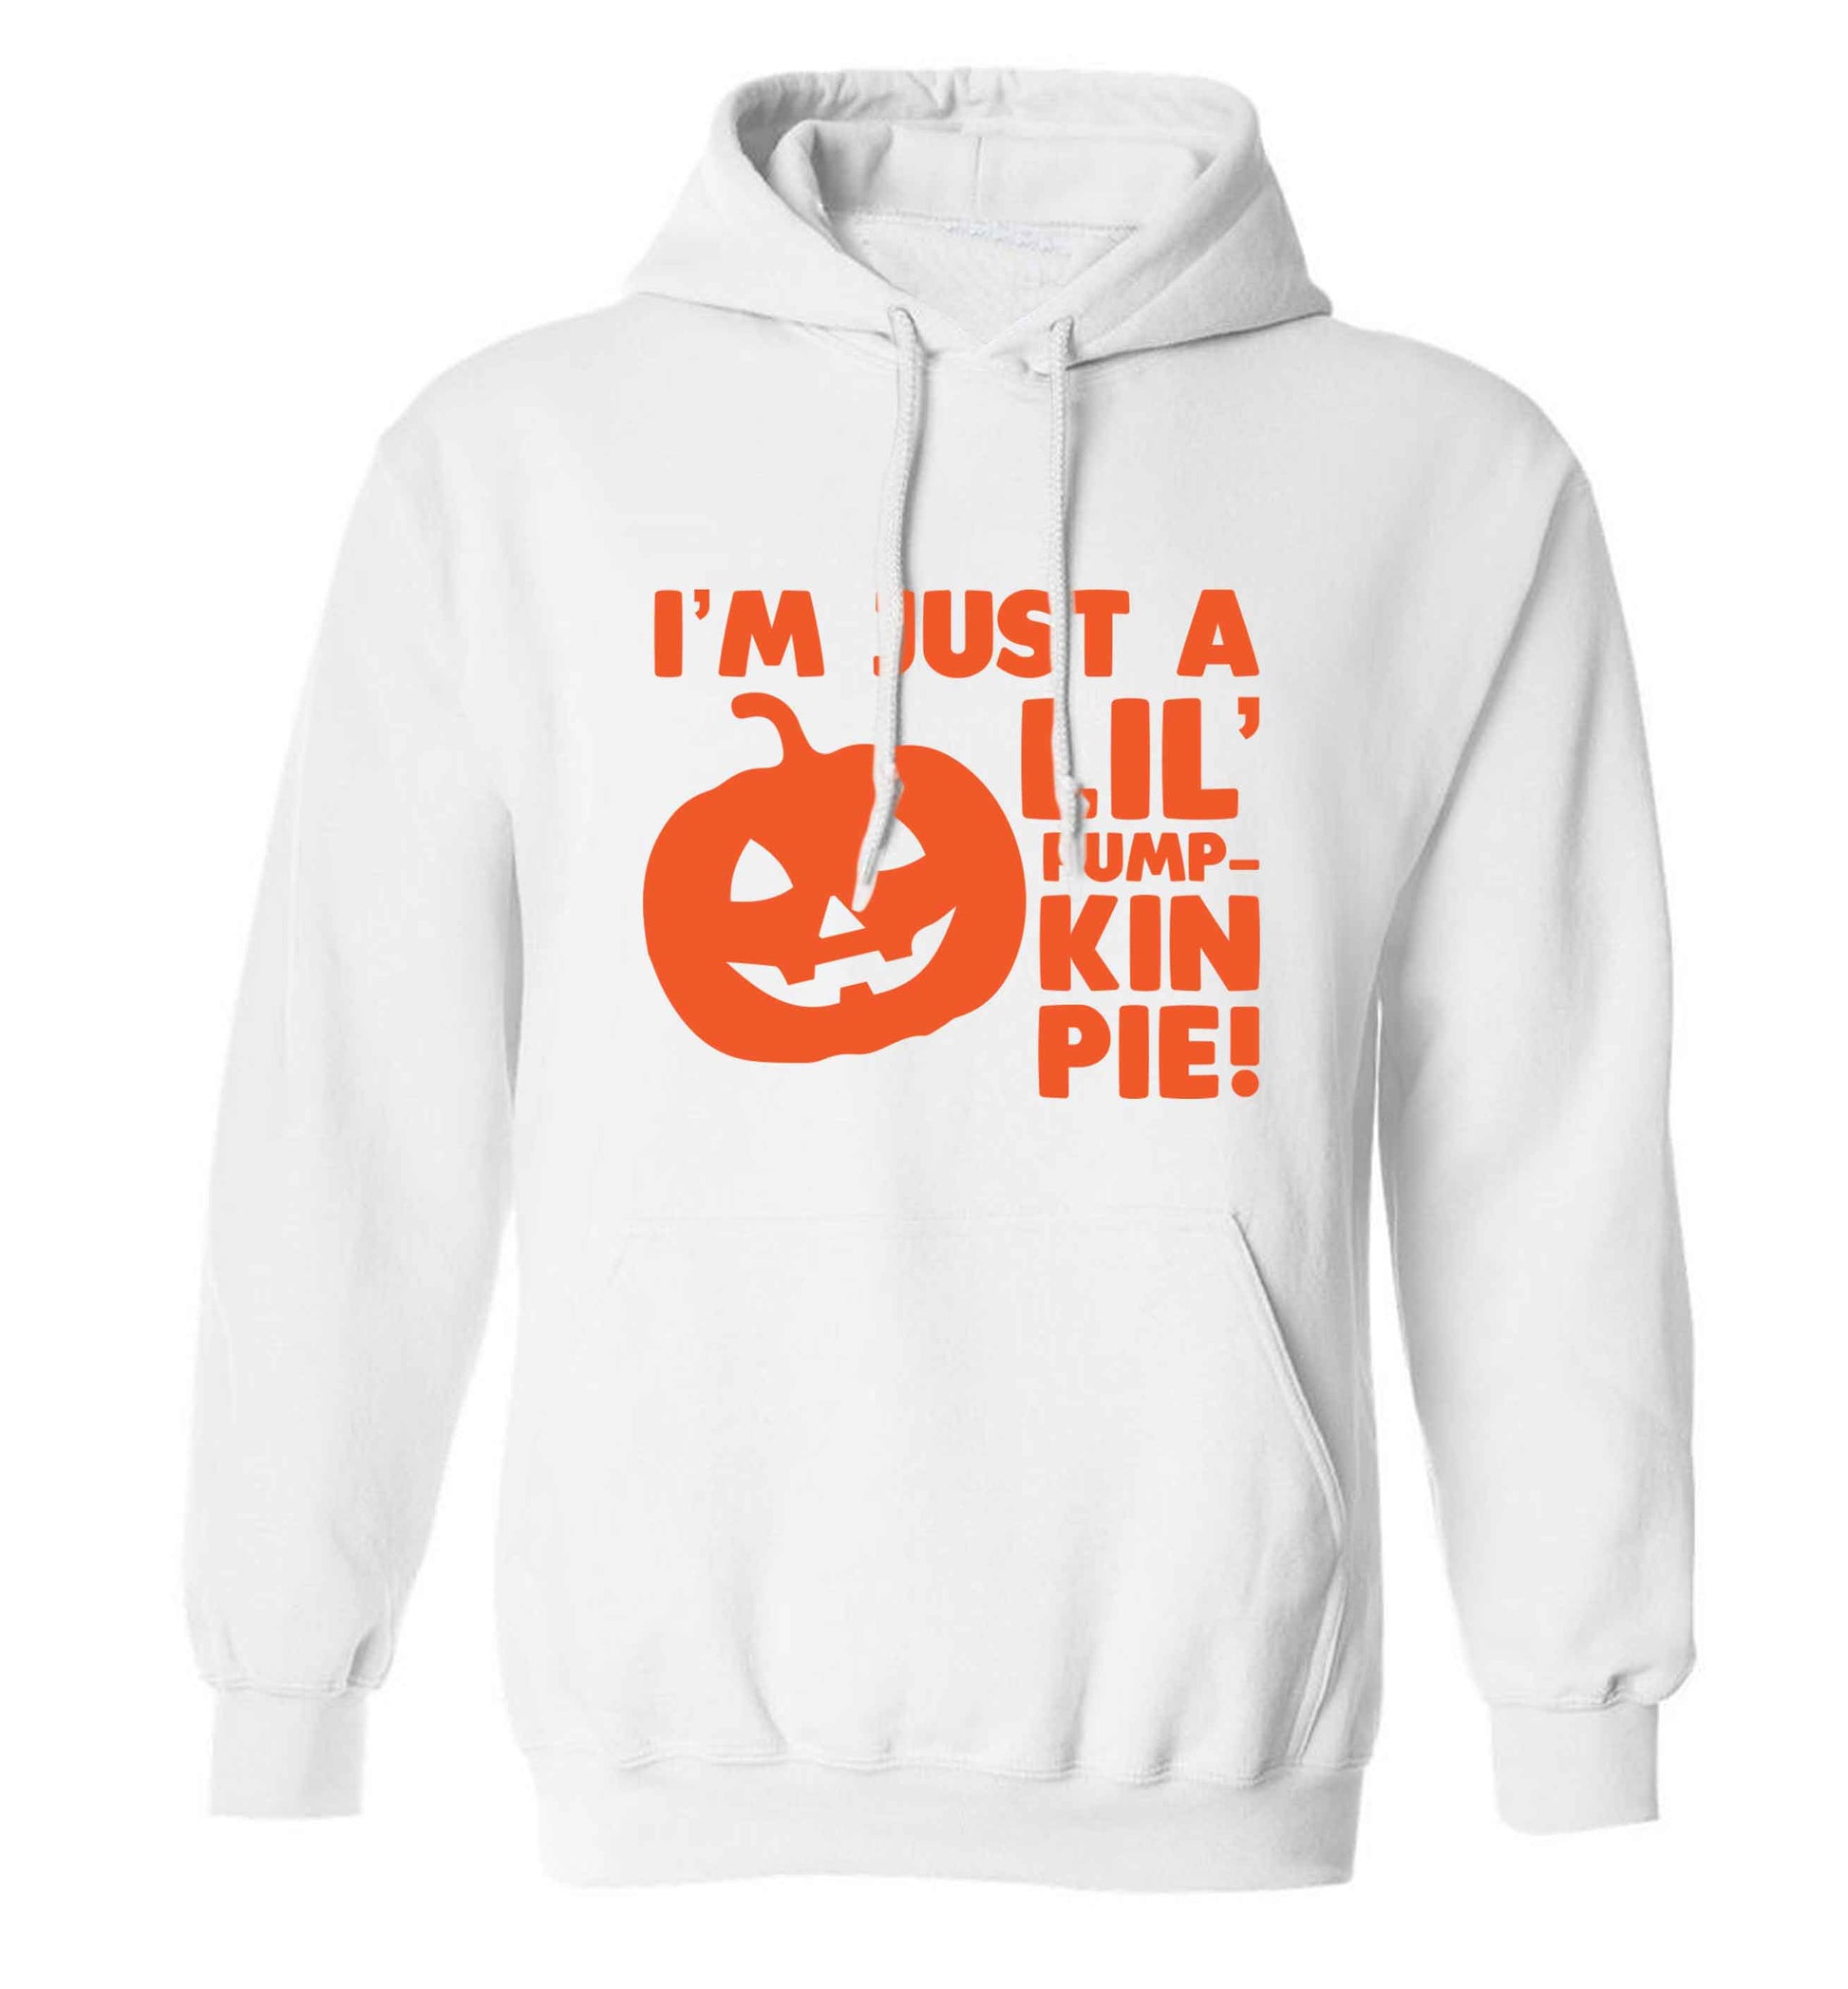 I'm just a lil' pumpkin pie adults unisex white hoodie 2XL